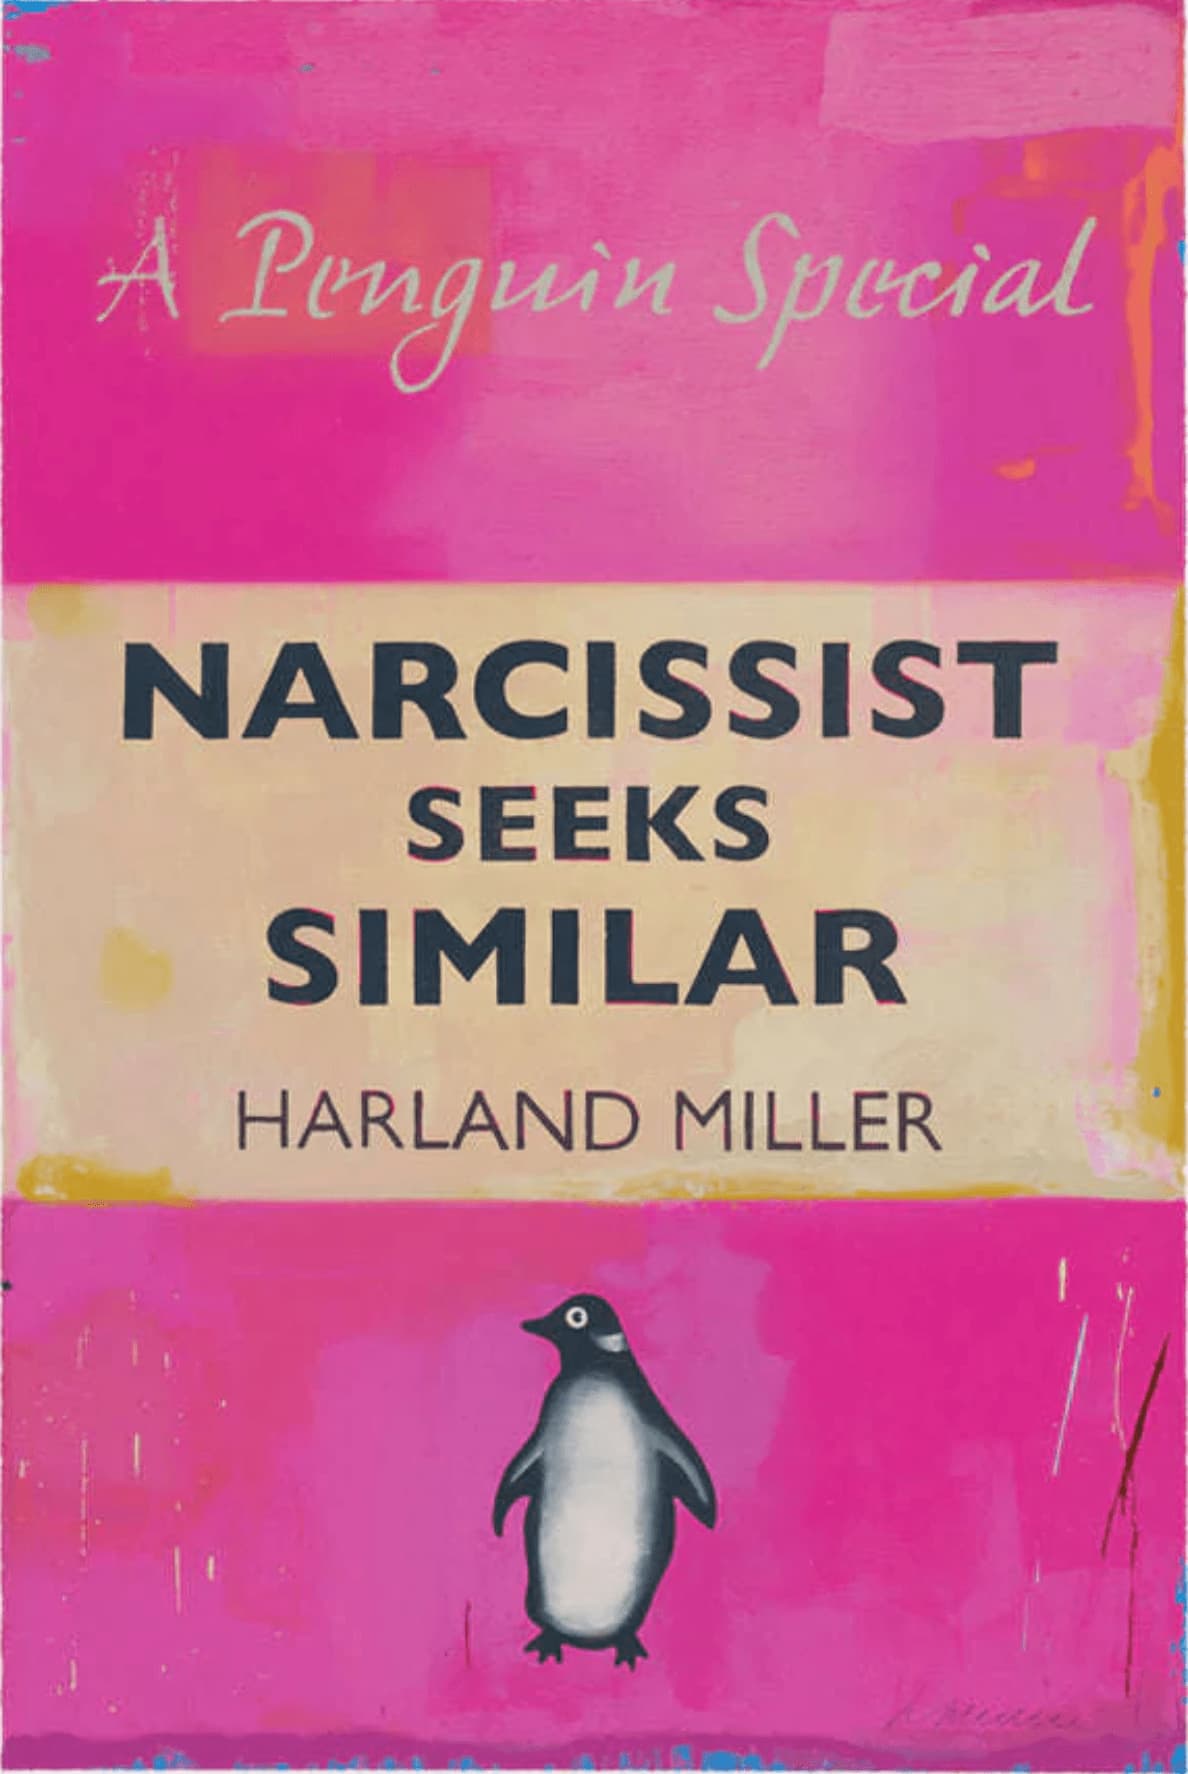 Harland Miller, Narcissist Seeks Similar (Small), 2021